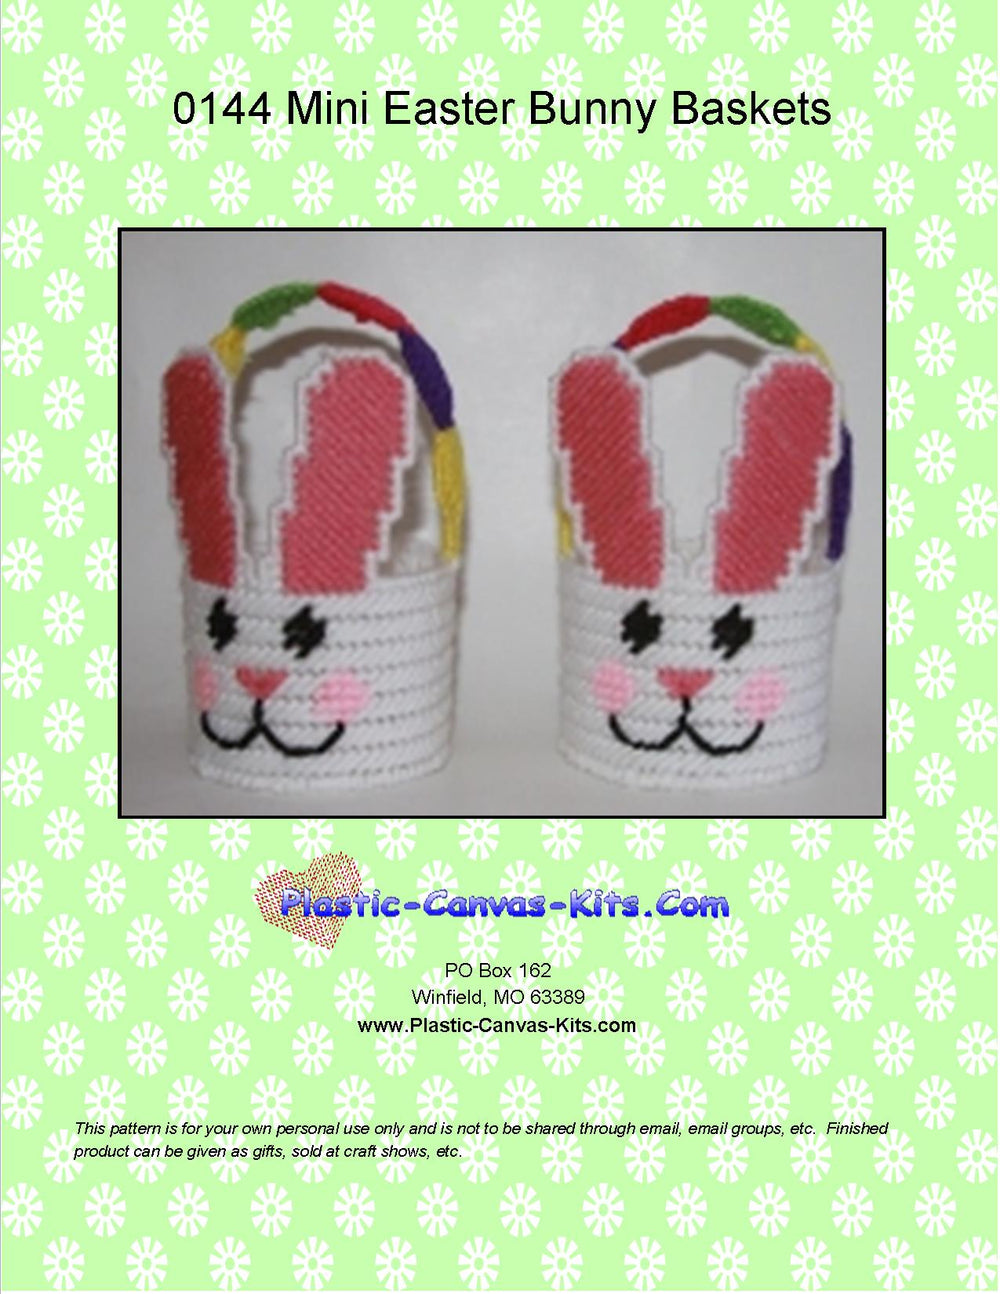 Mini Easter Bunny Baskets